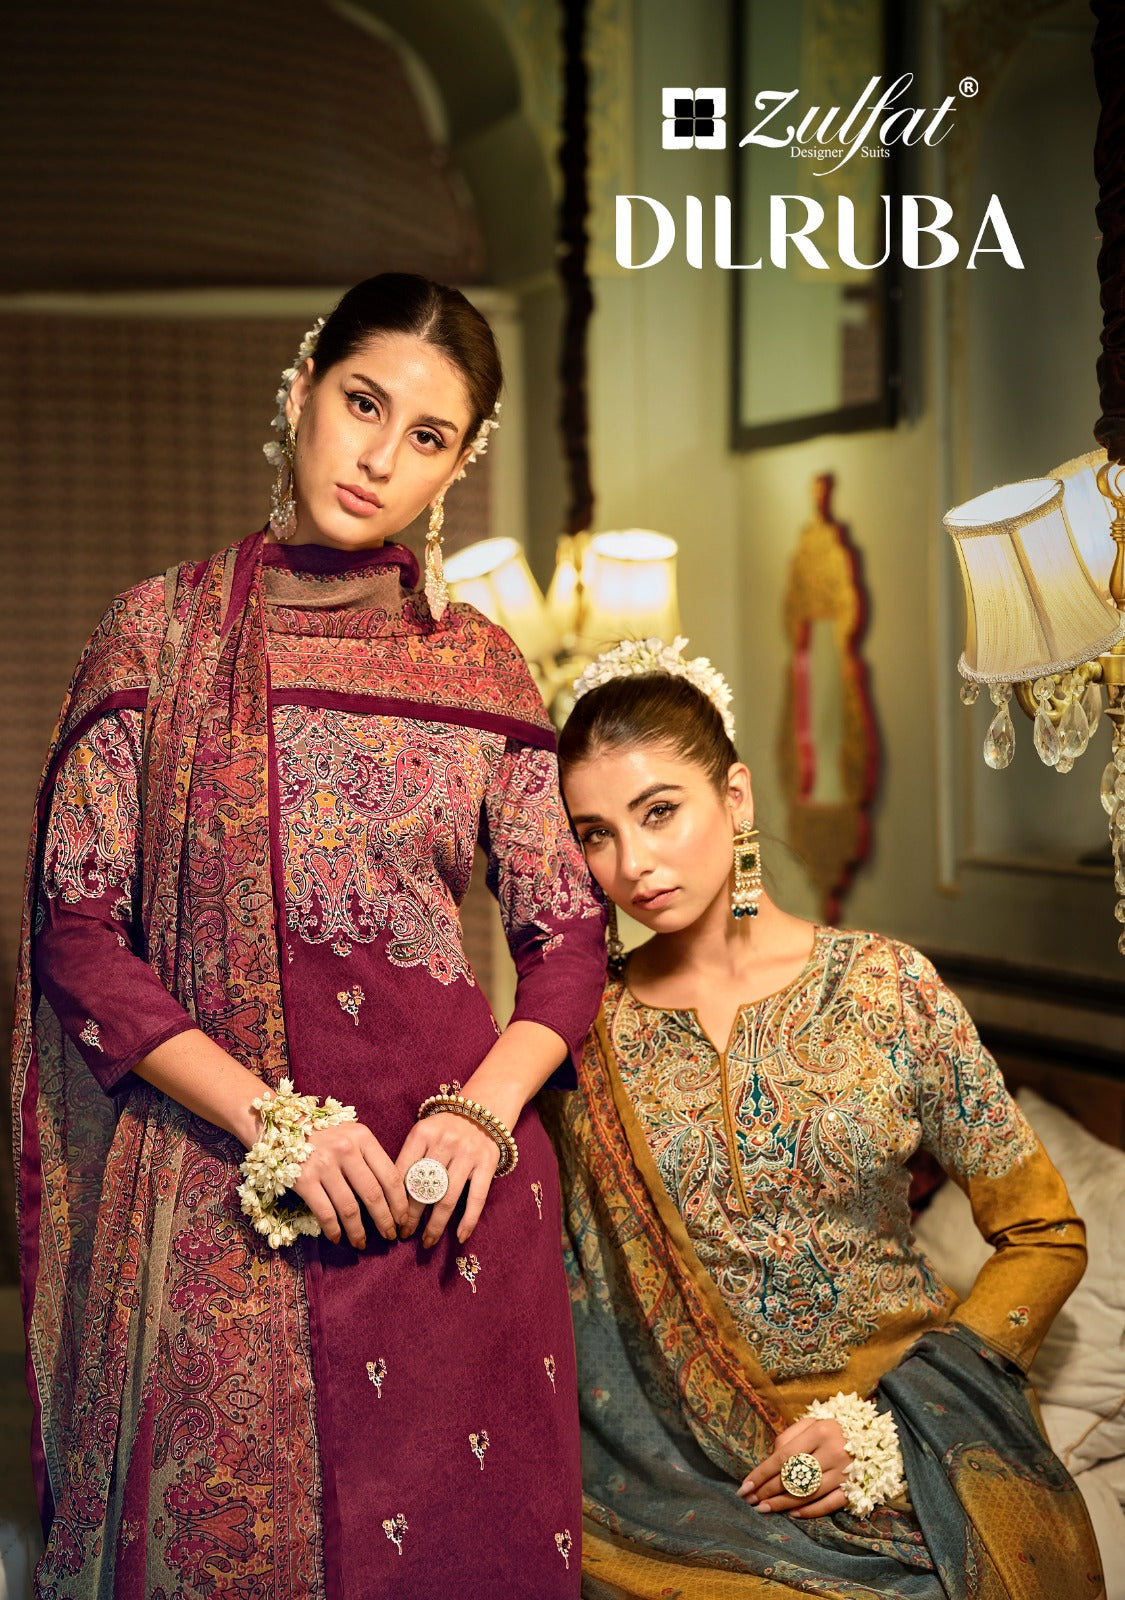 Zulfat Designer Suits Dilruba Cotton With Hand Work Salwar Suits For Women